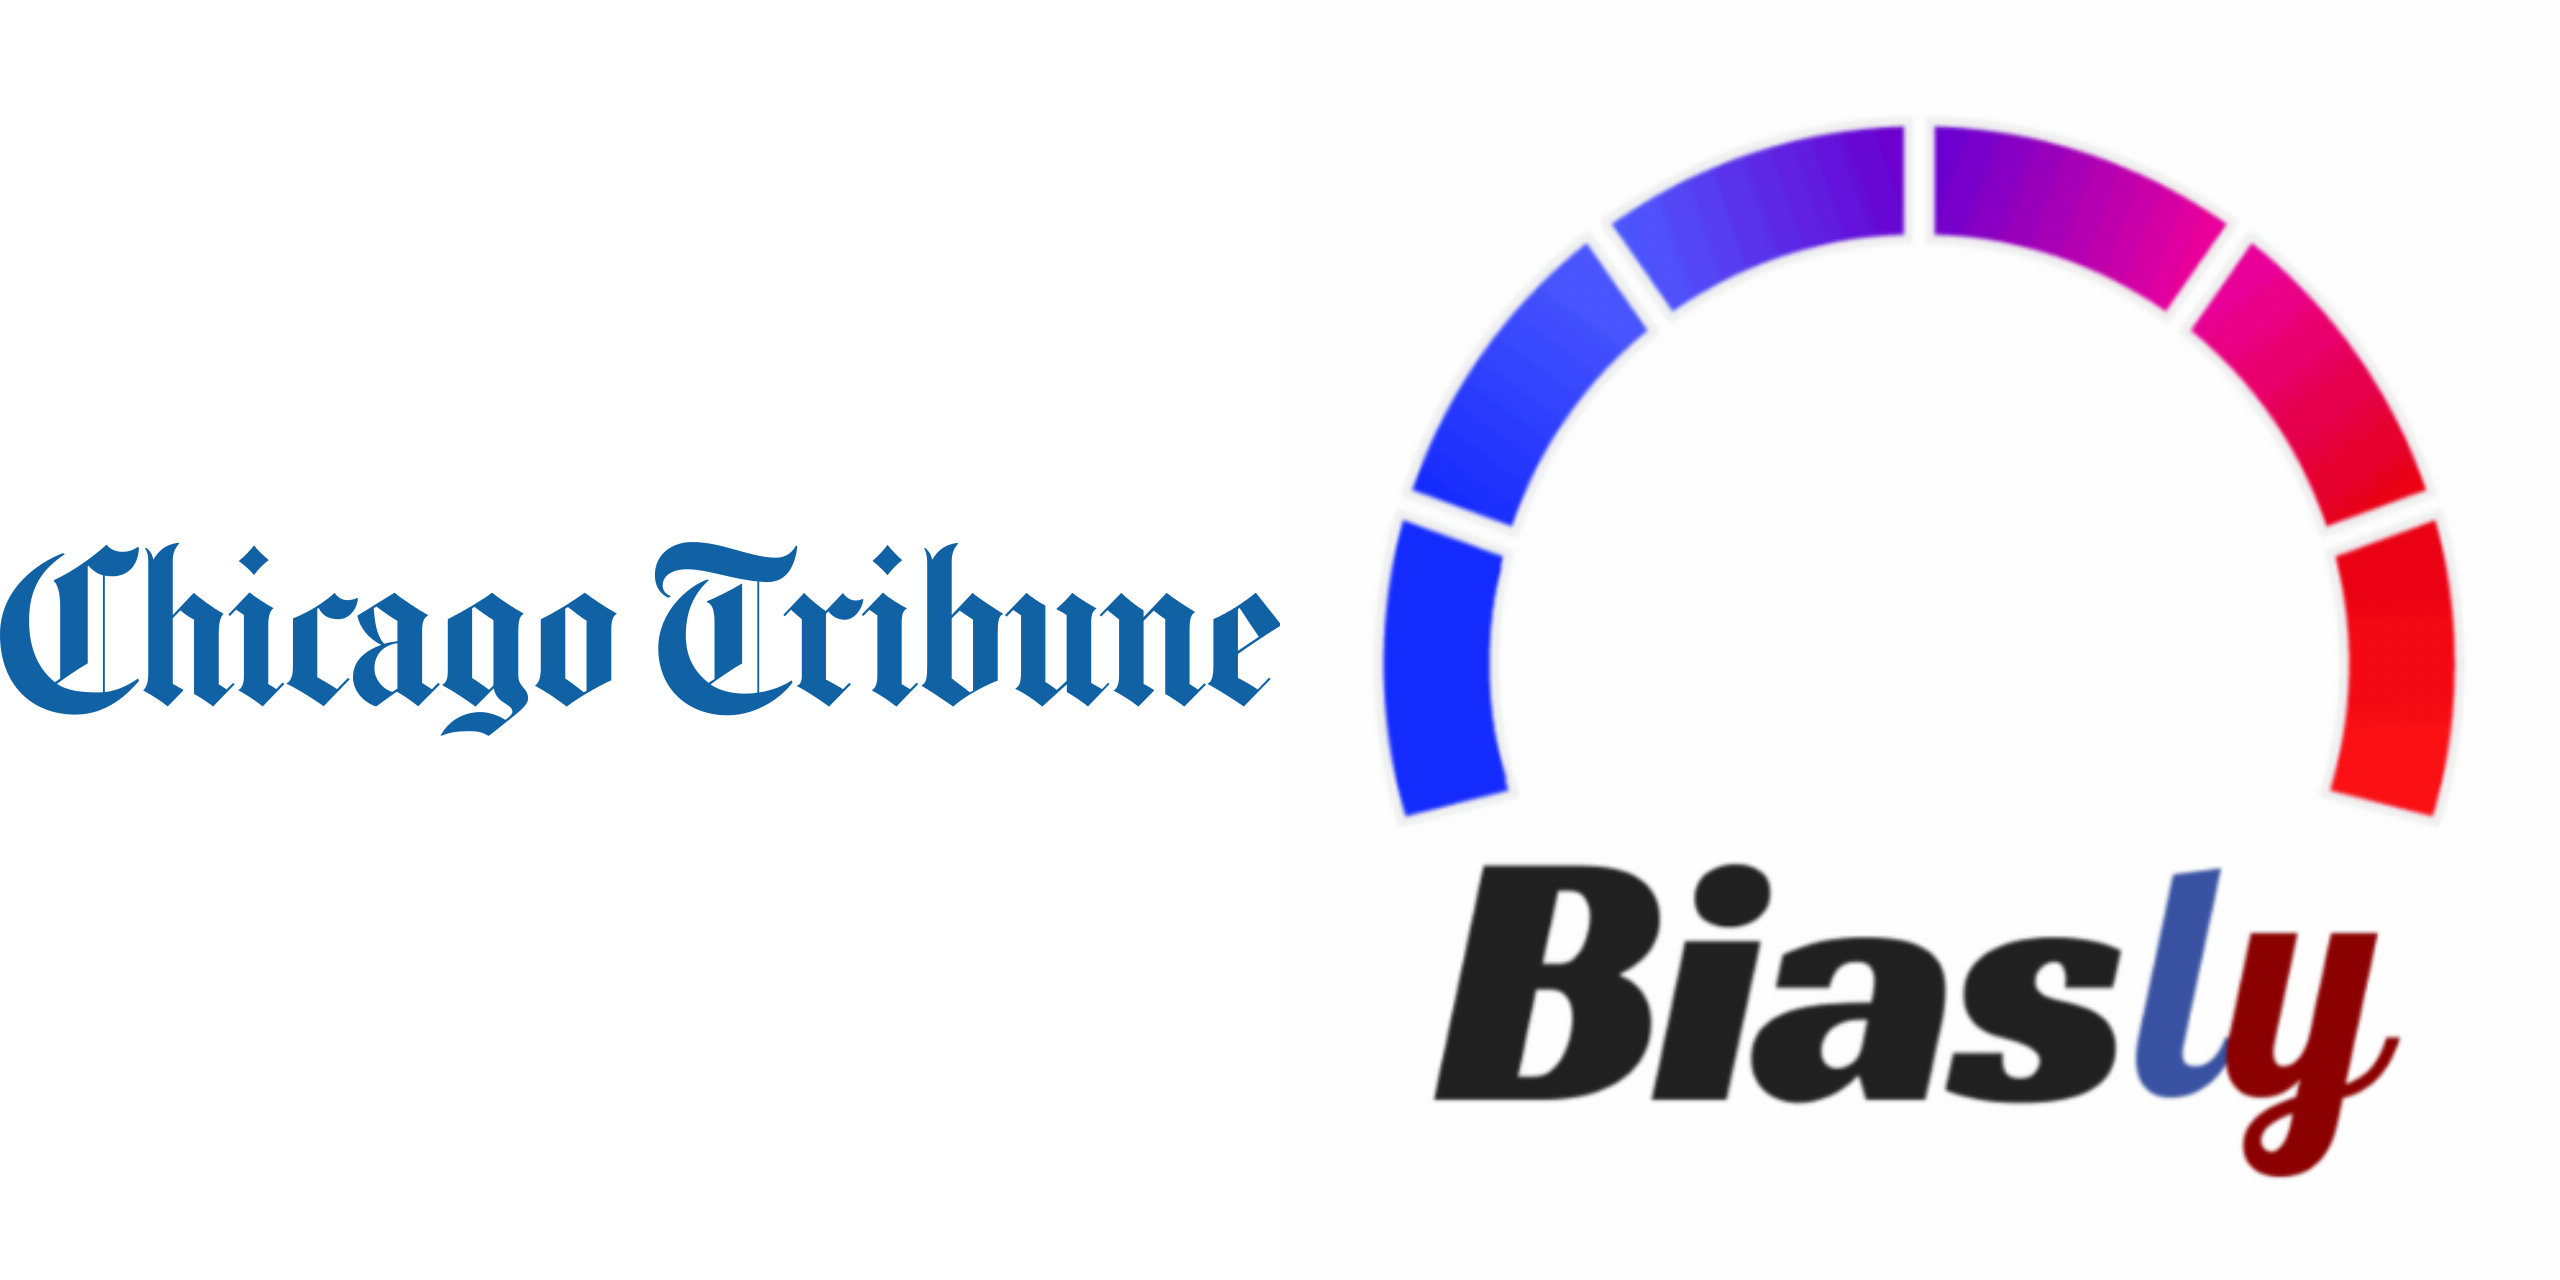 Chicago Tribune Bias and Reliability